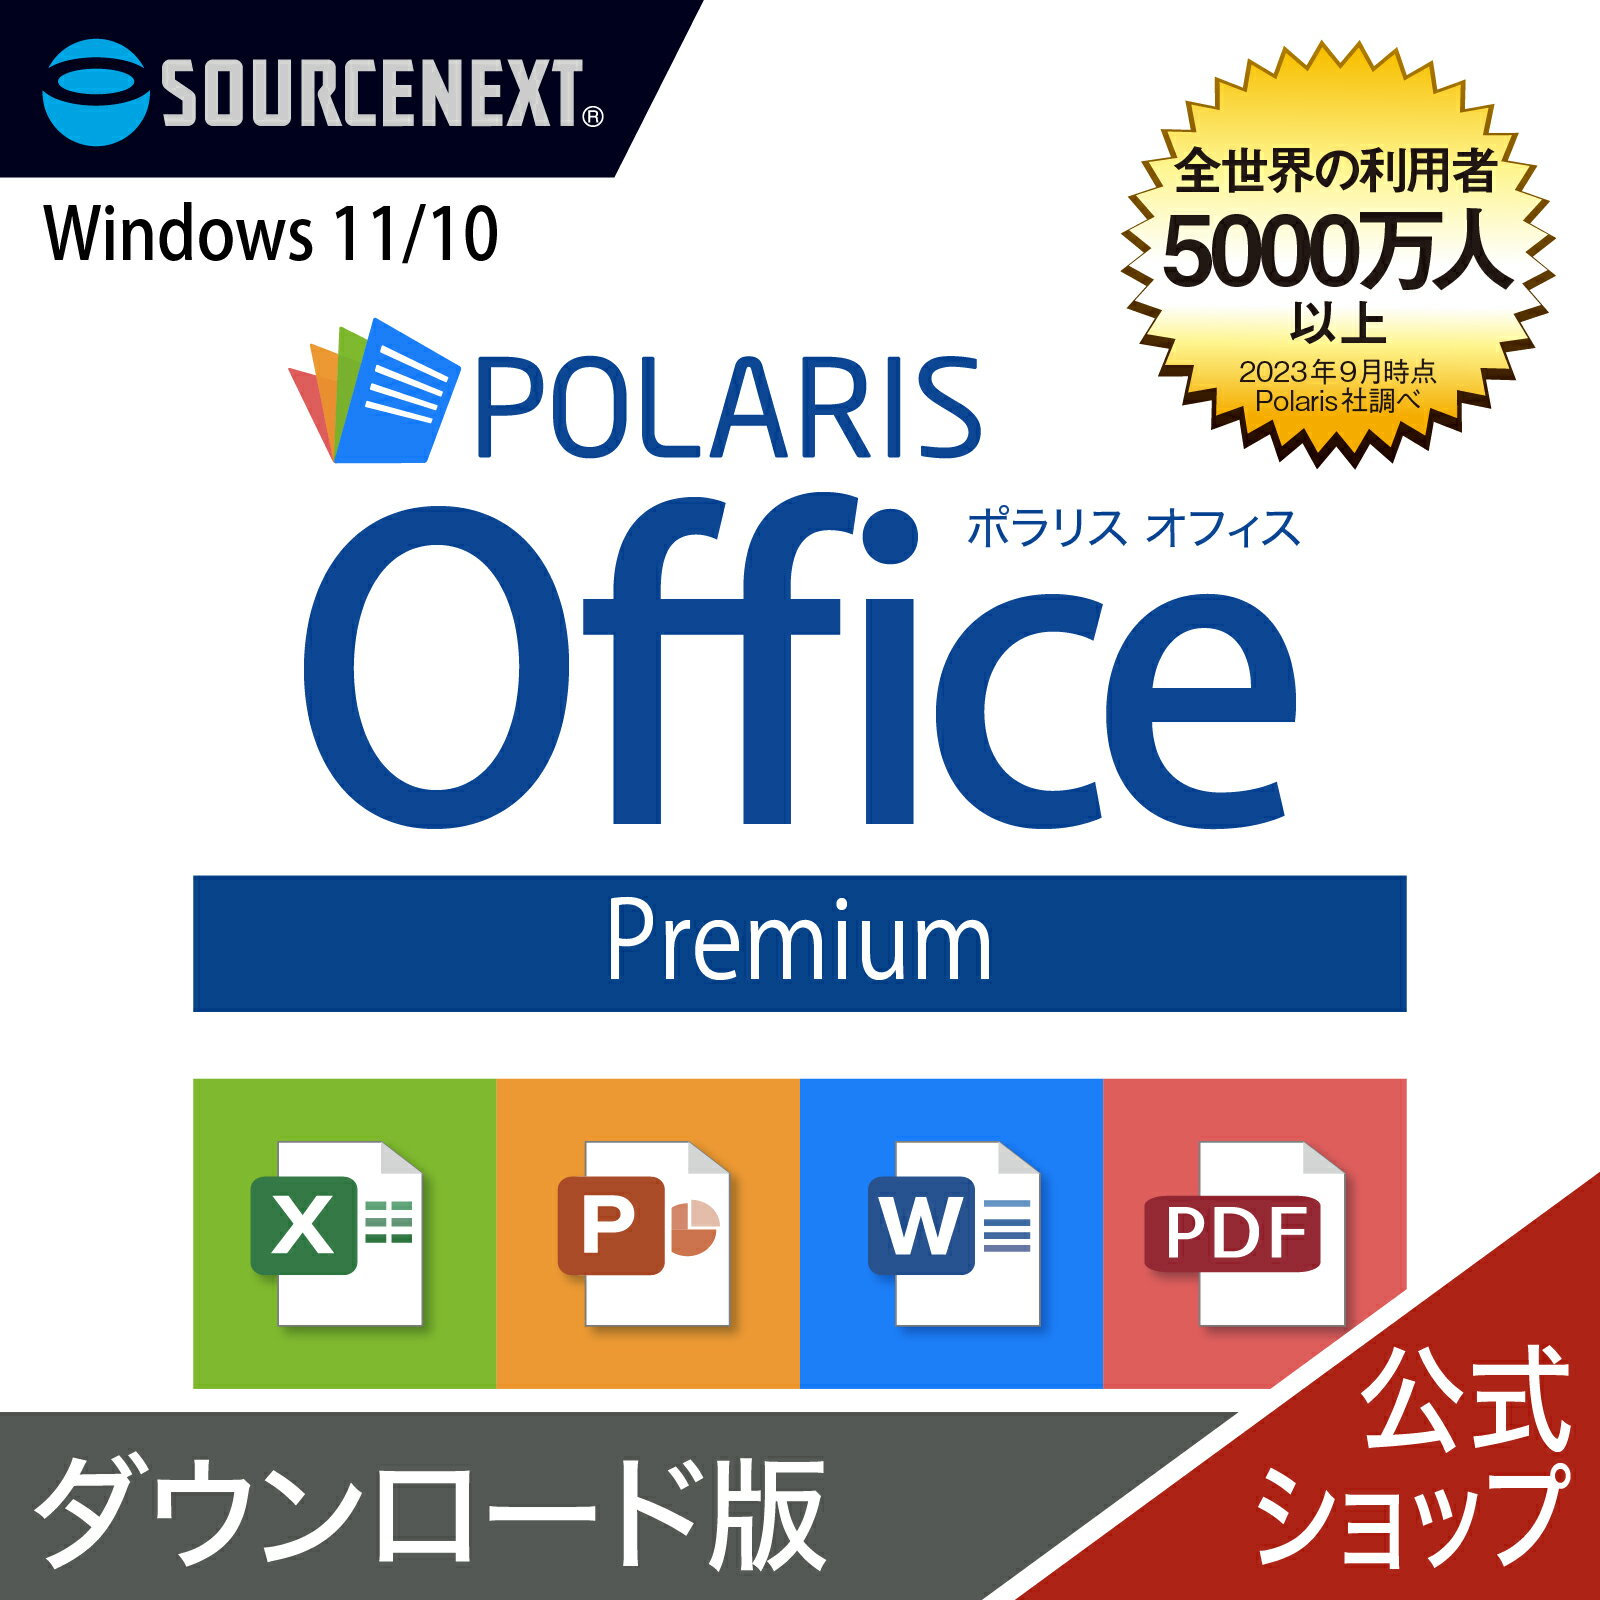 Polaris Office Premium　DL_SNR  ポラリス Microsoft Office オフィス 互換性 Excel PowerPoint Word パワーポイント エクセルソフト ワード